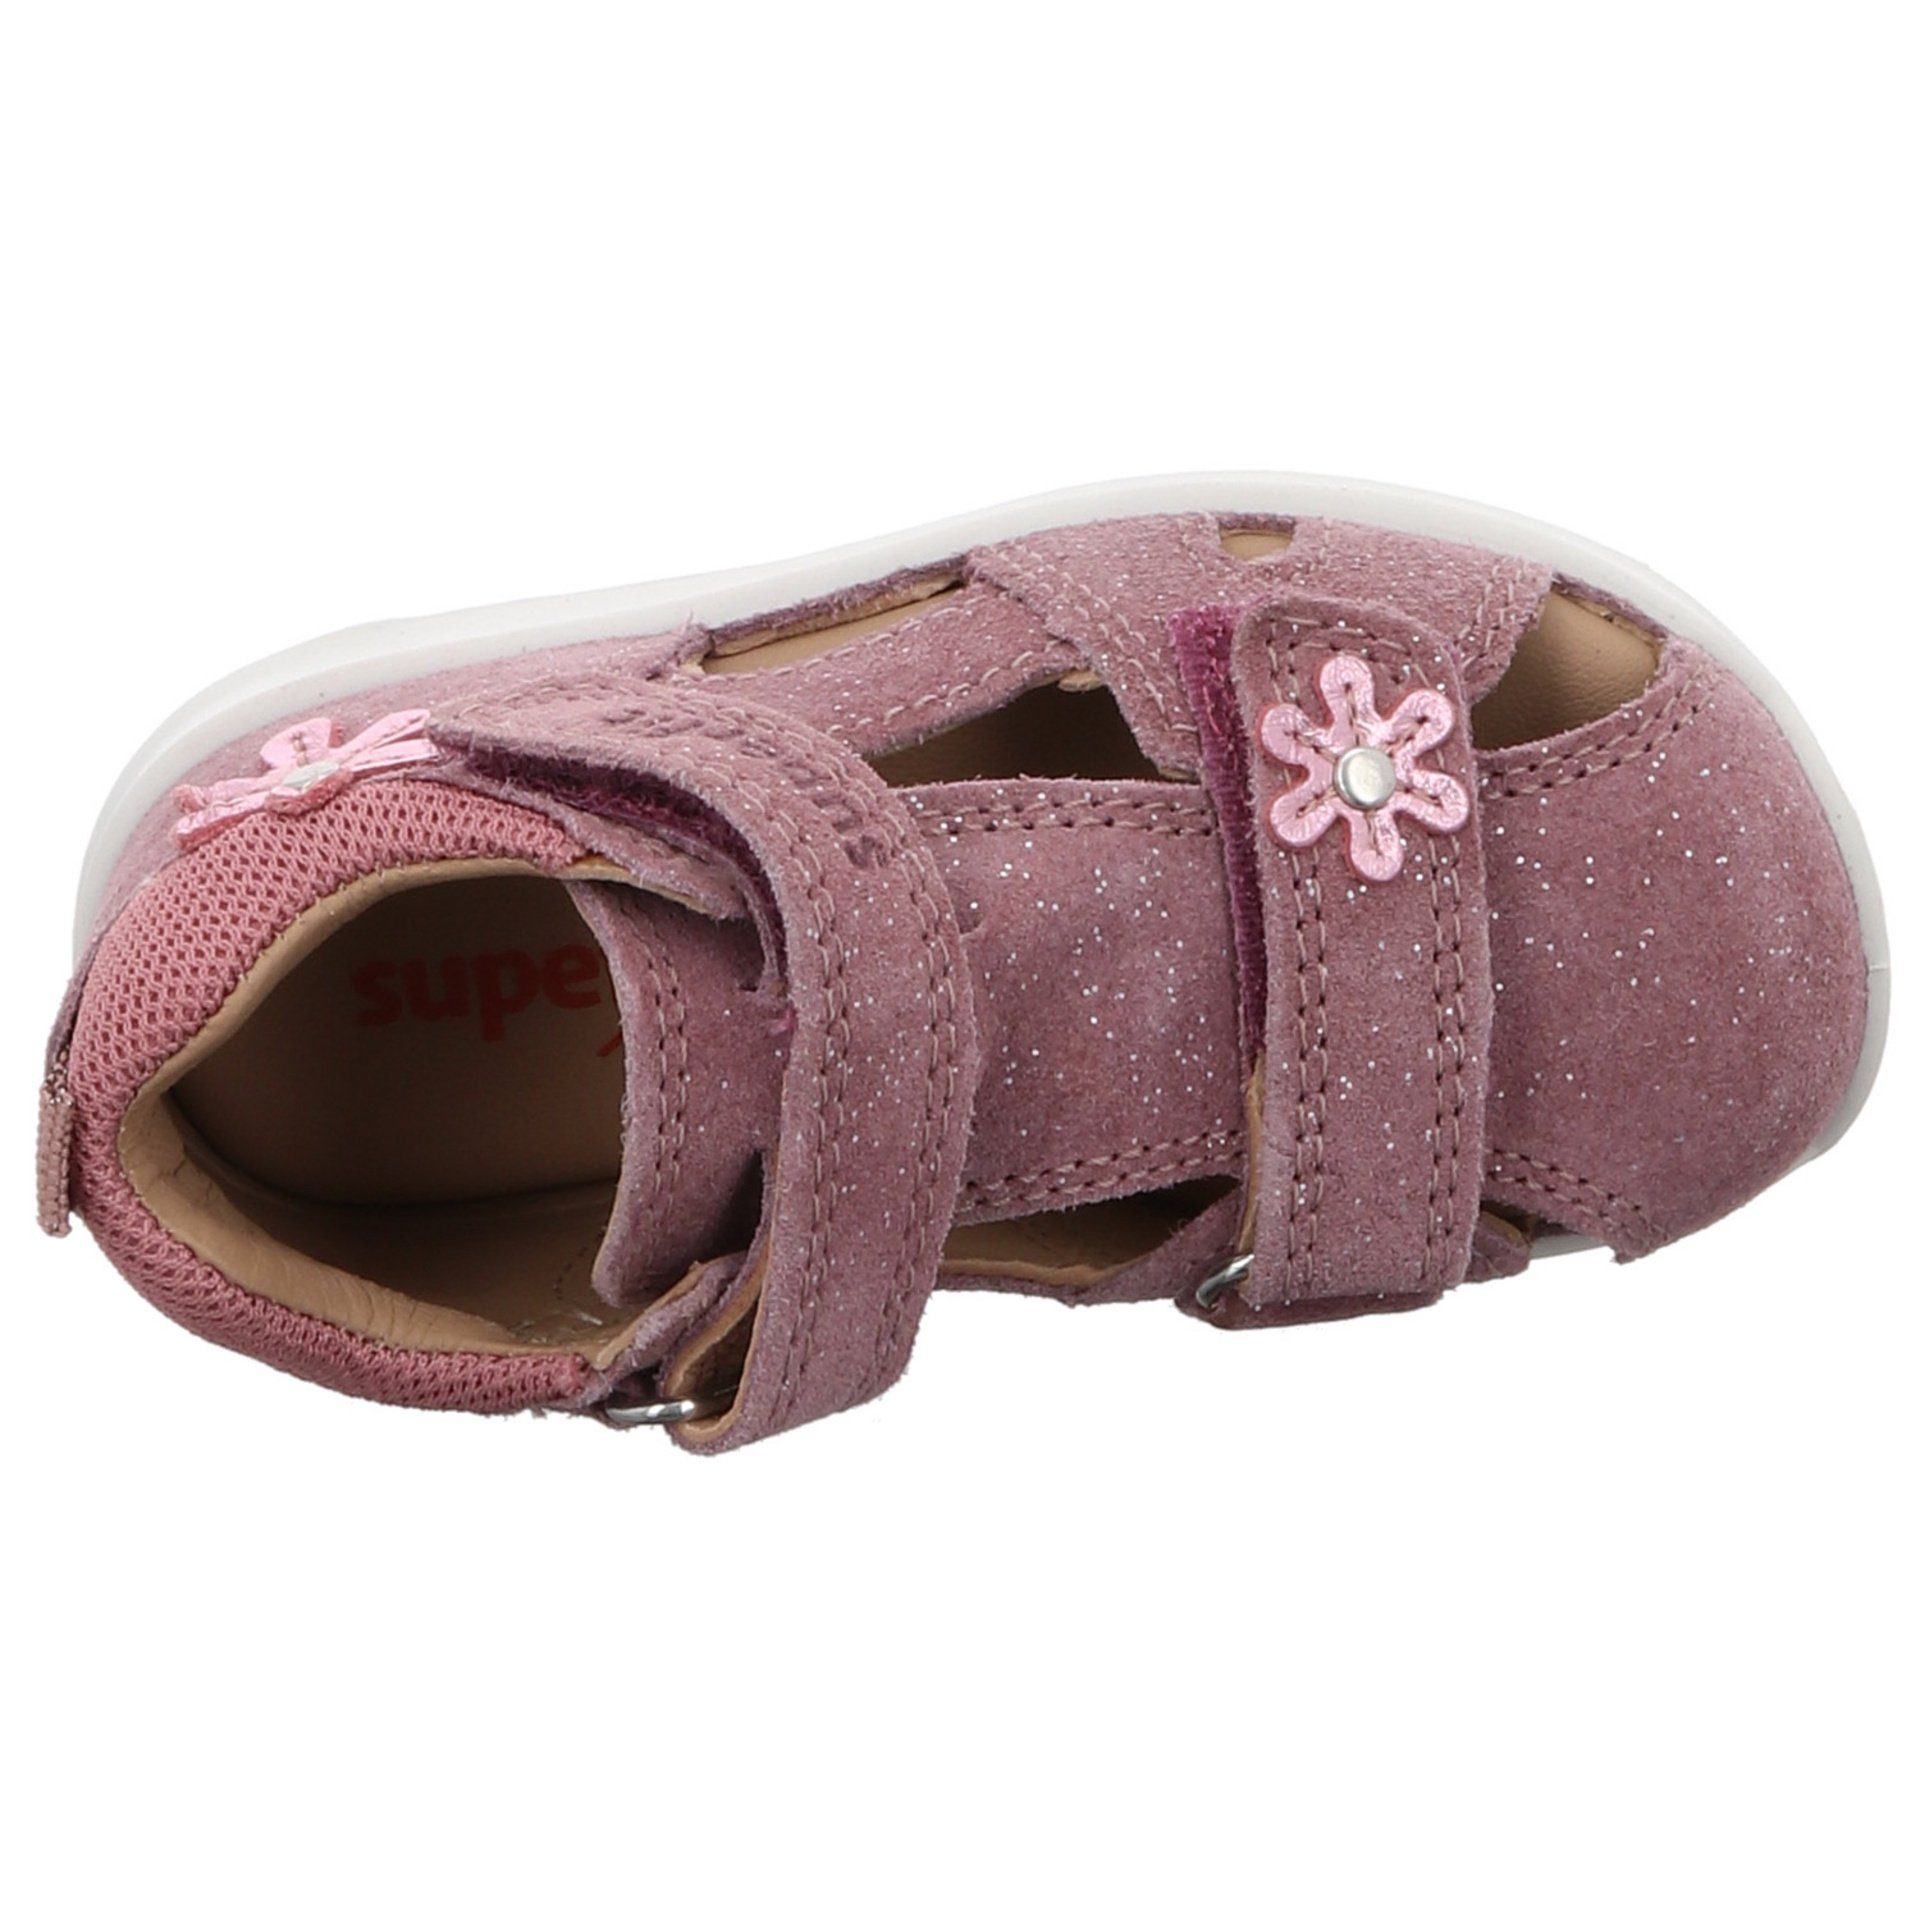 Superfit Mädchen Sandalen Schuhe Leder-/Textilkombination Bumblebee Minilette Sandale LILA/ROSA